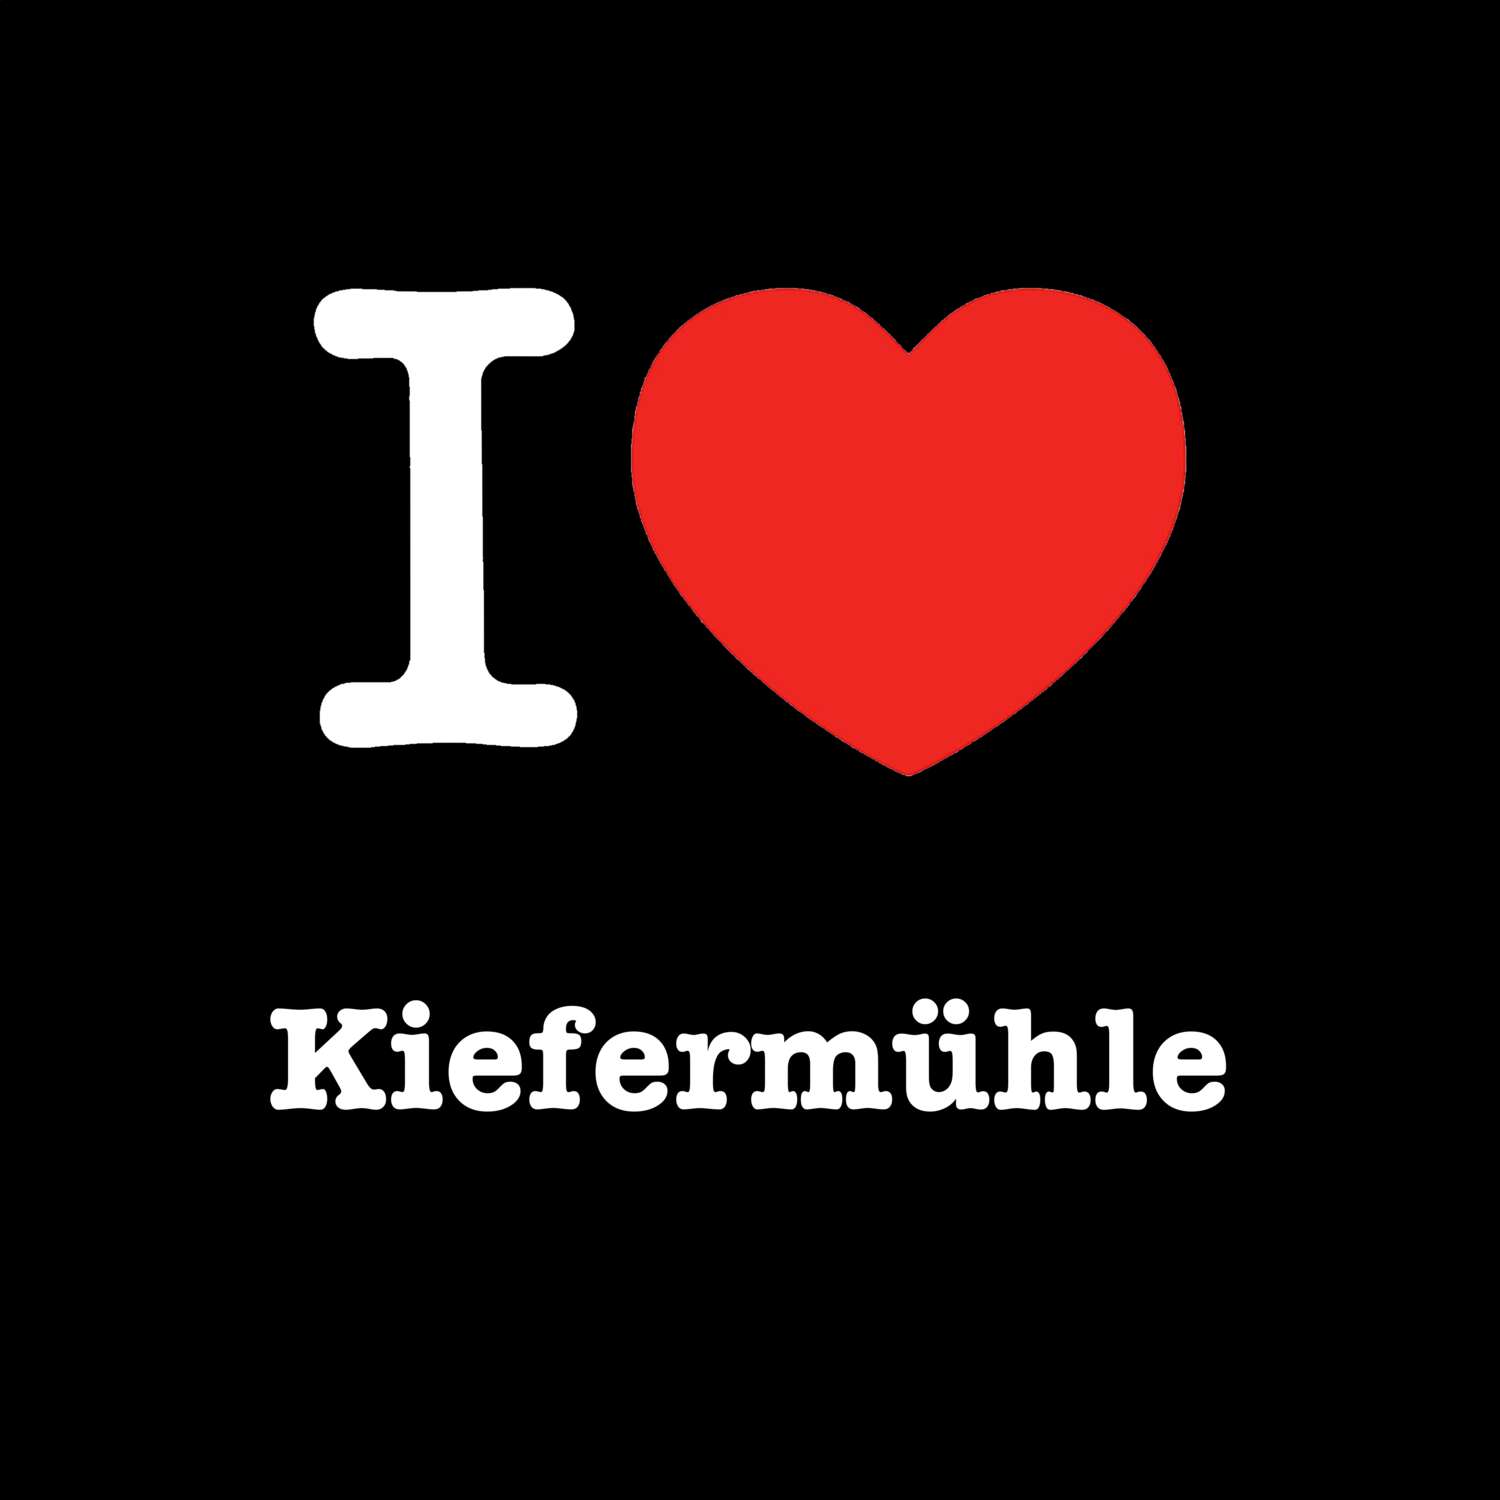 Kiefermühle T-Shirt »I love«